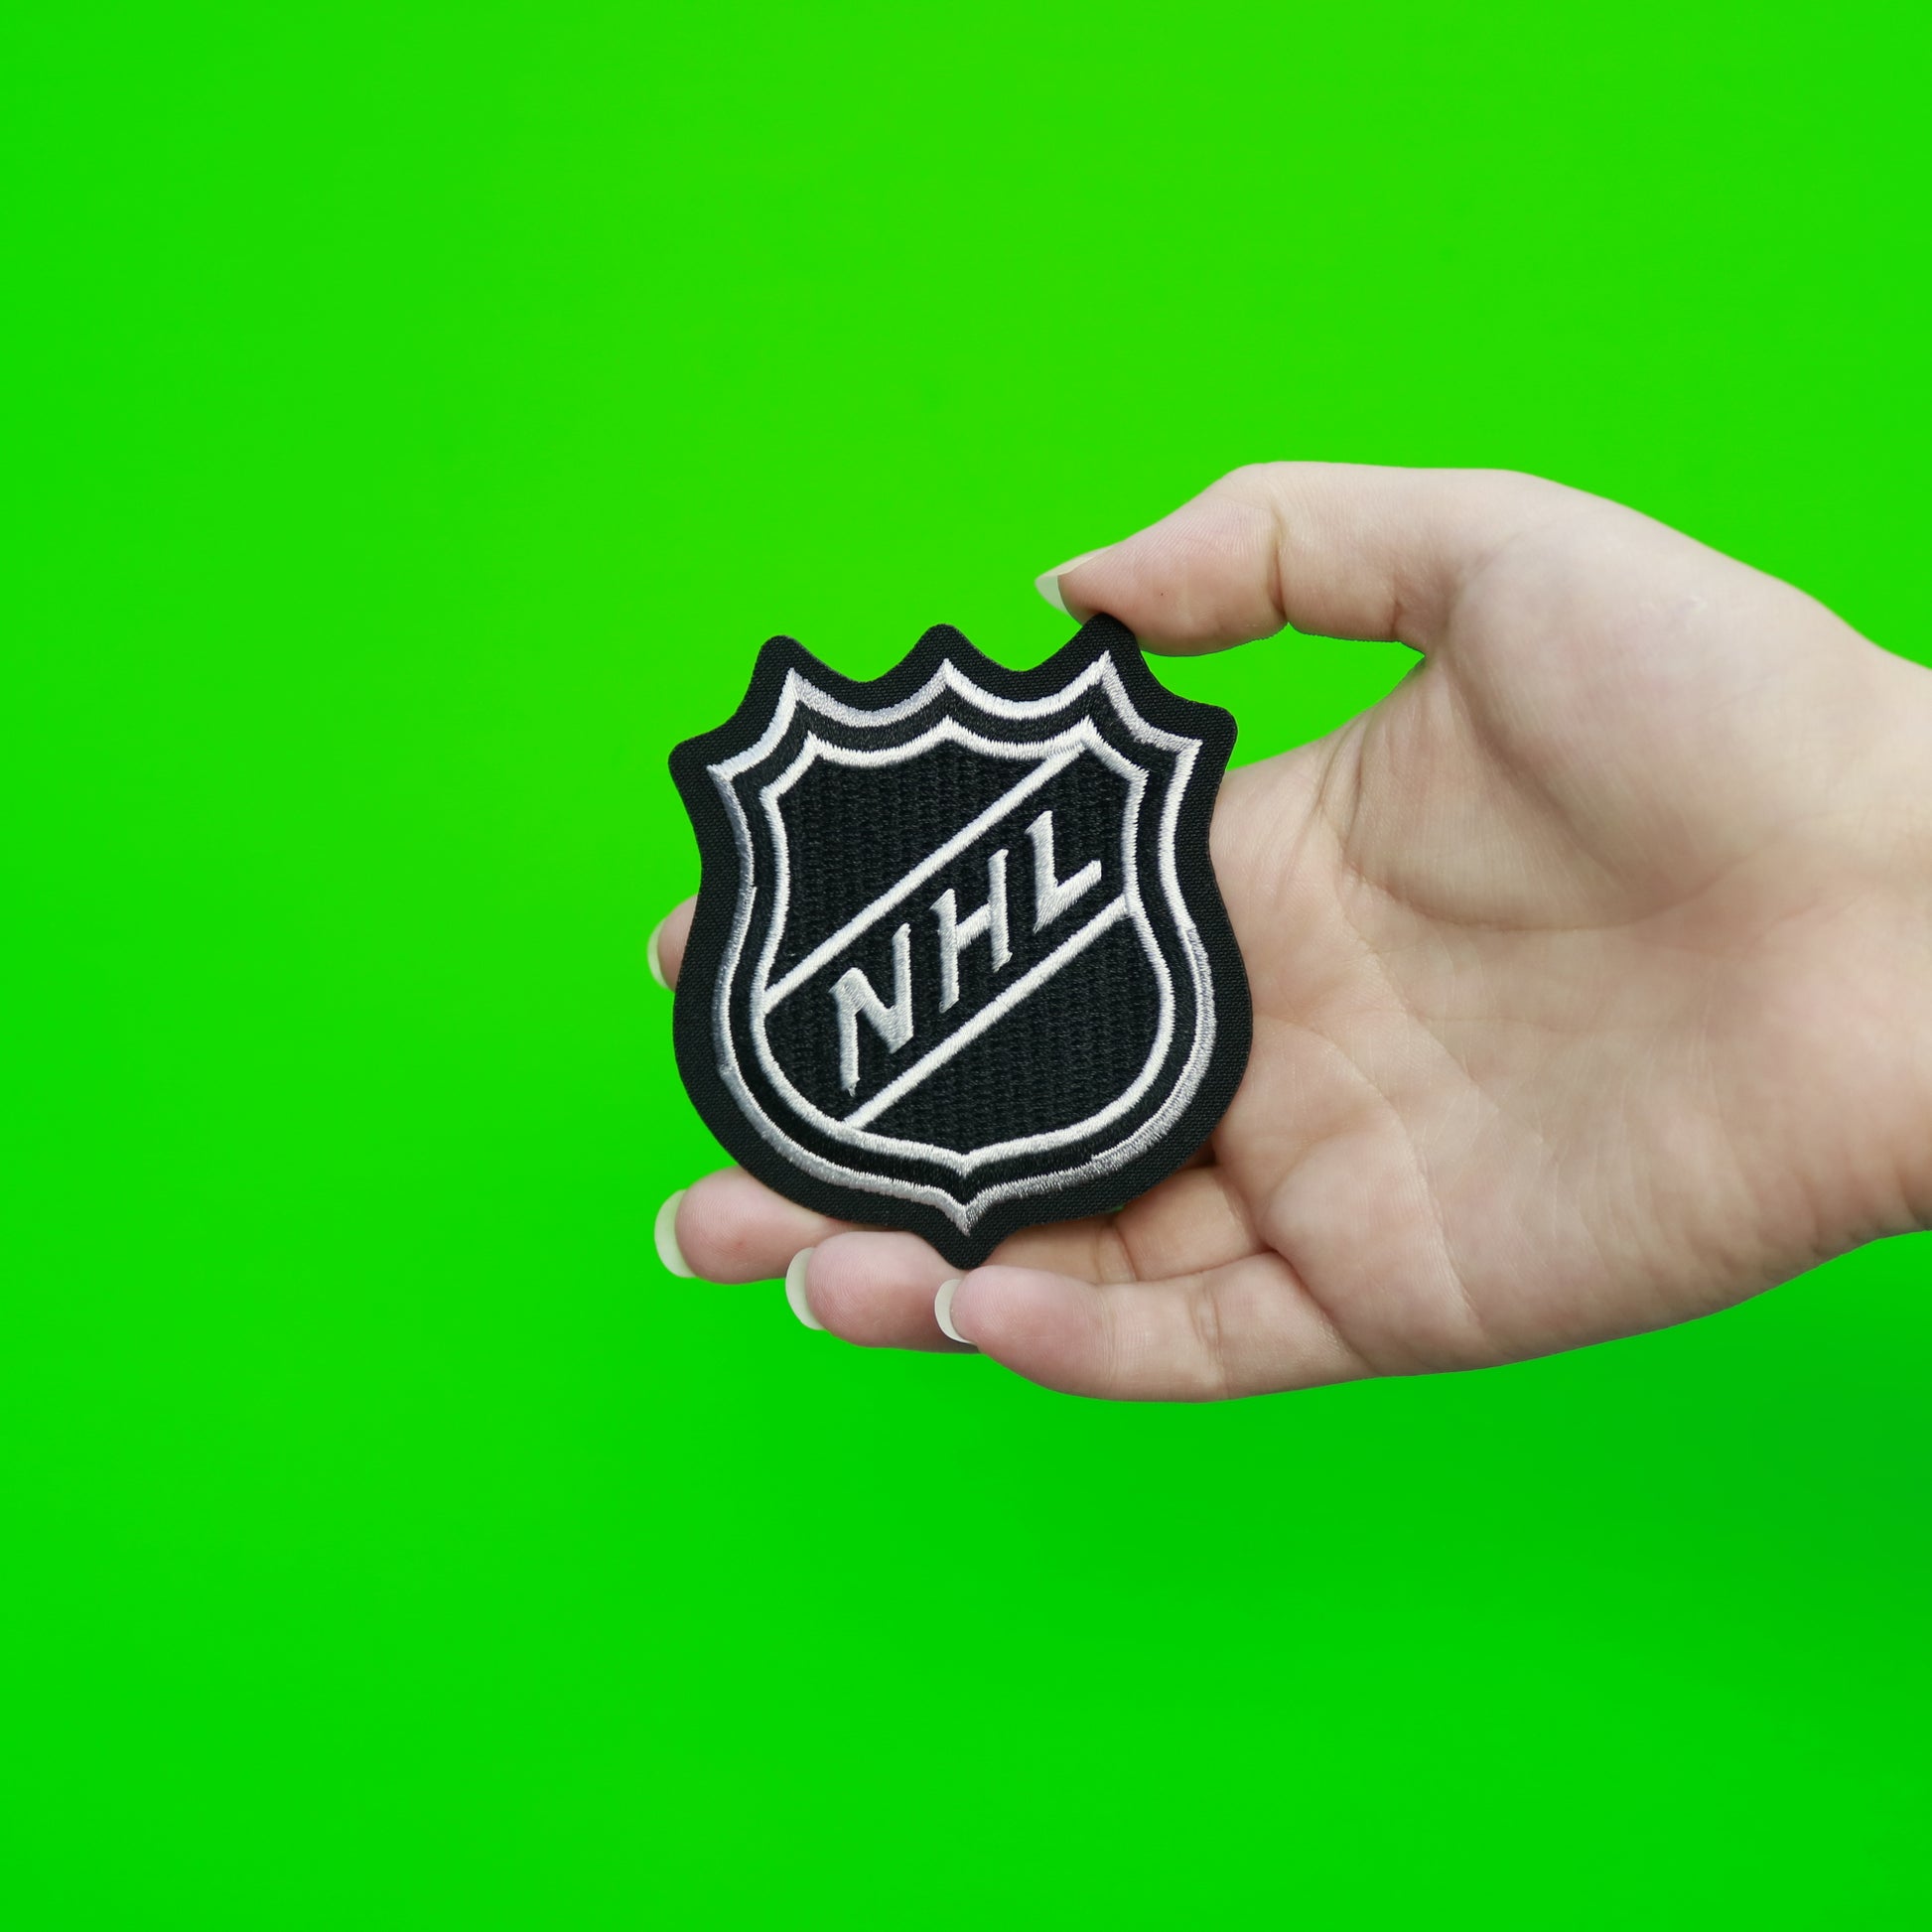 NHL Official National Hockey League Shield Logo Large Patch Emblem